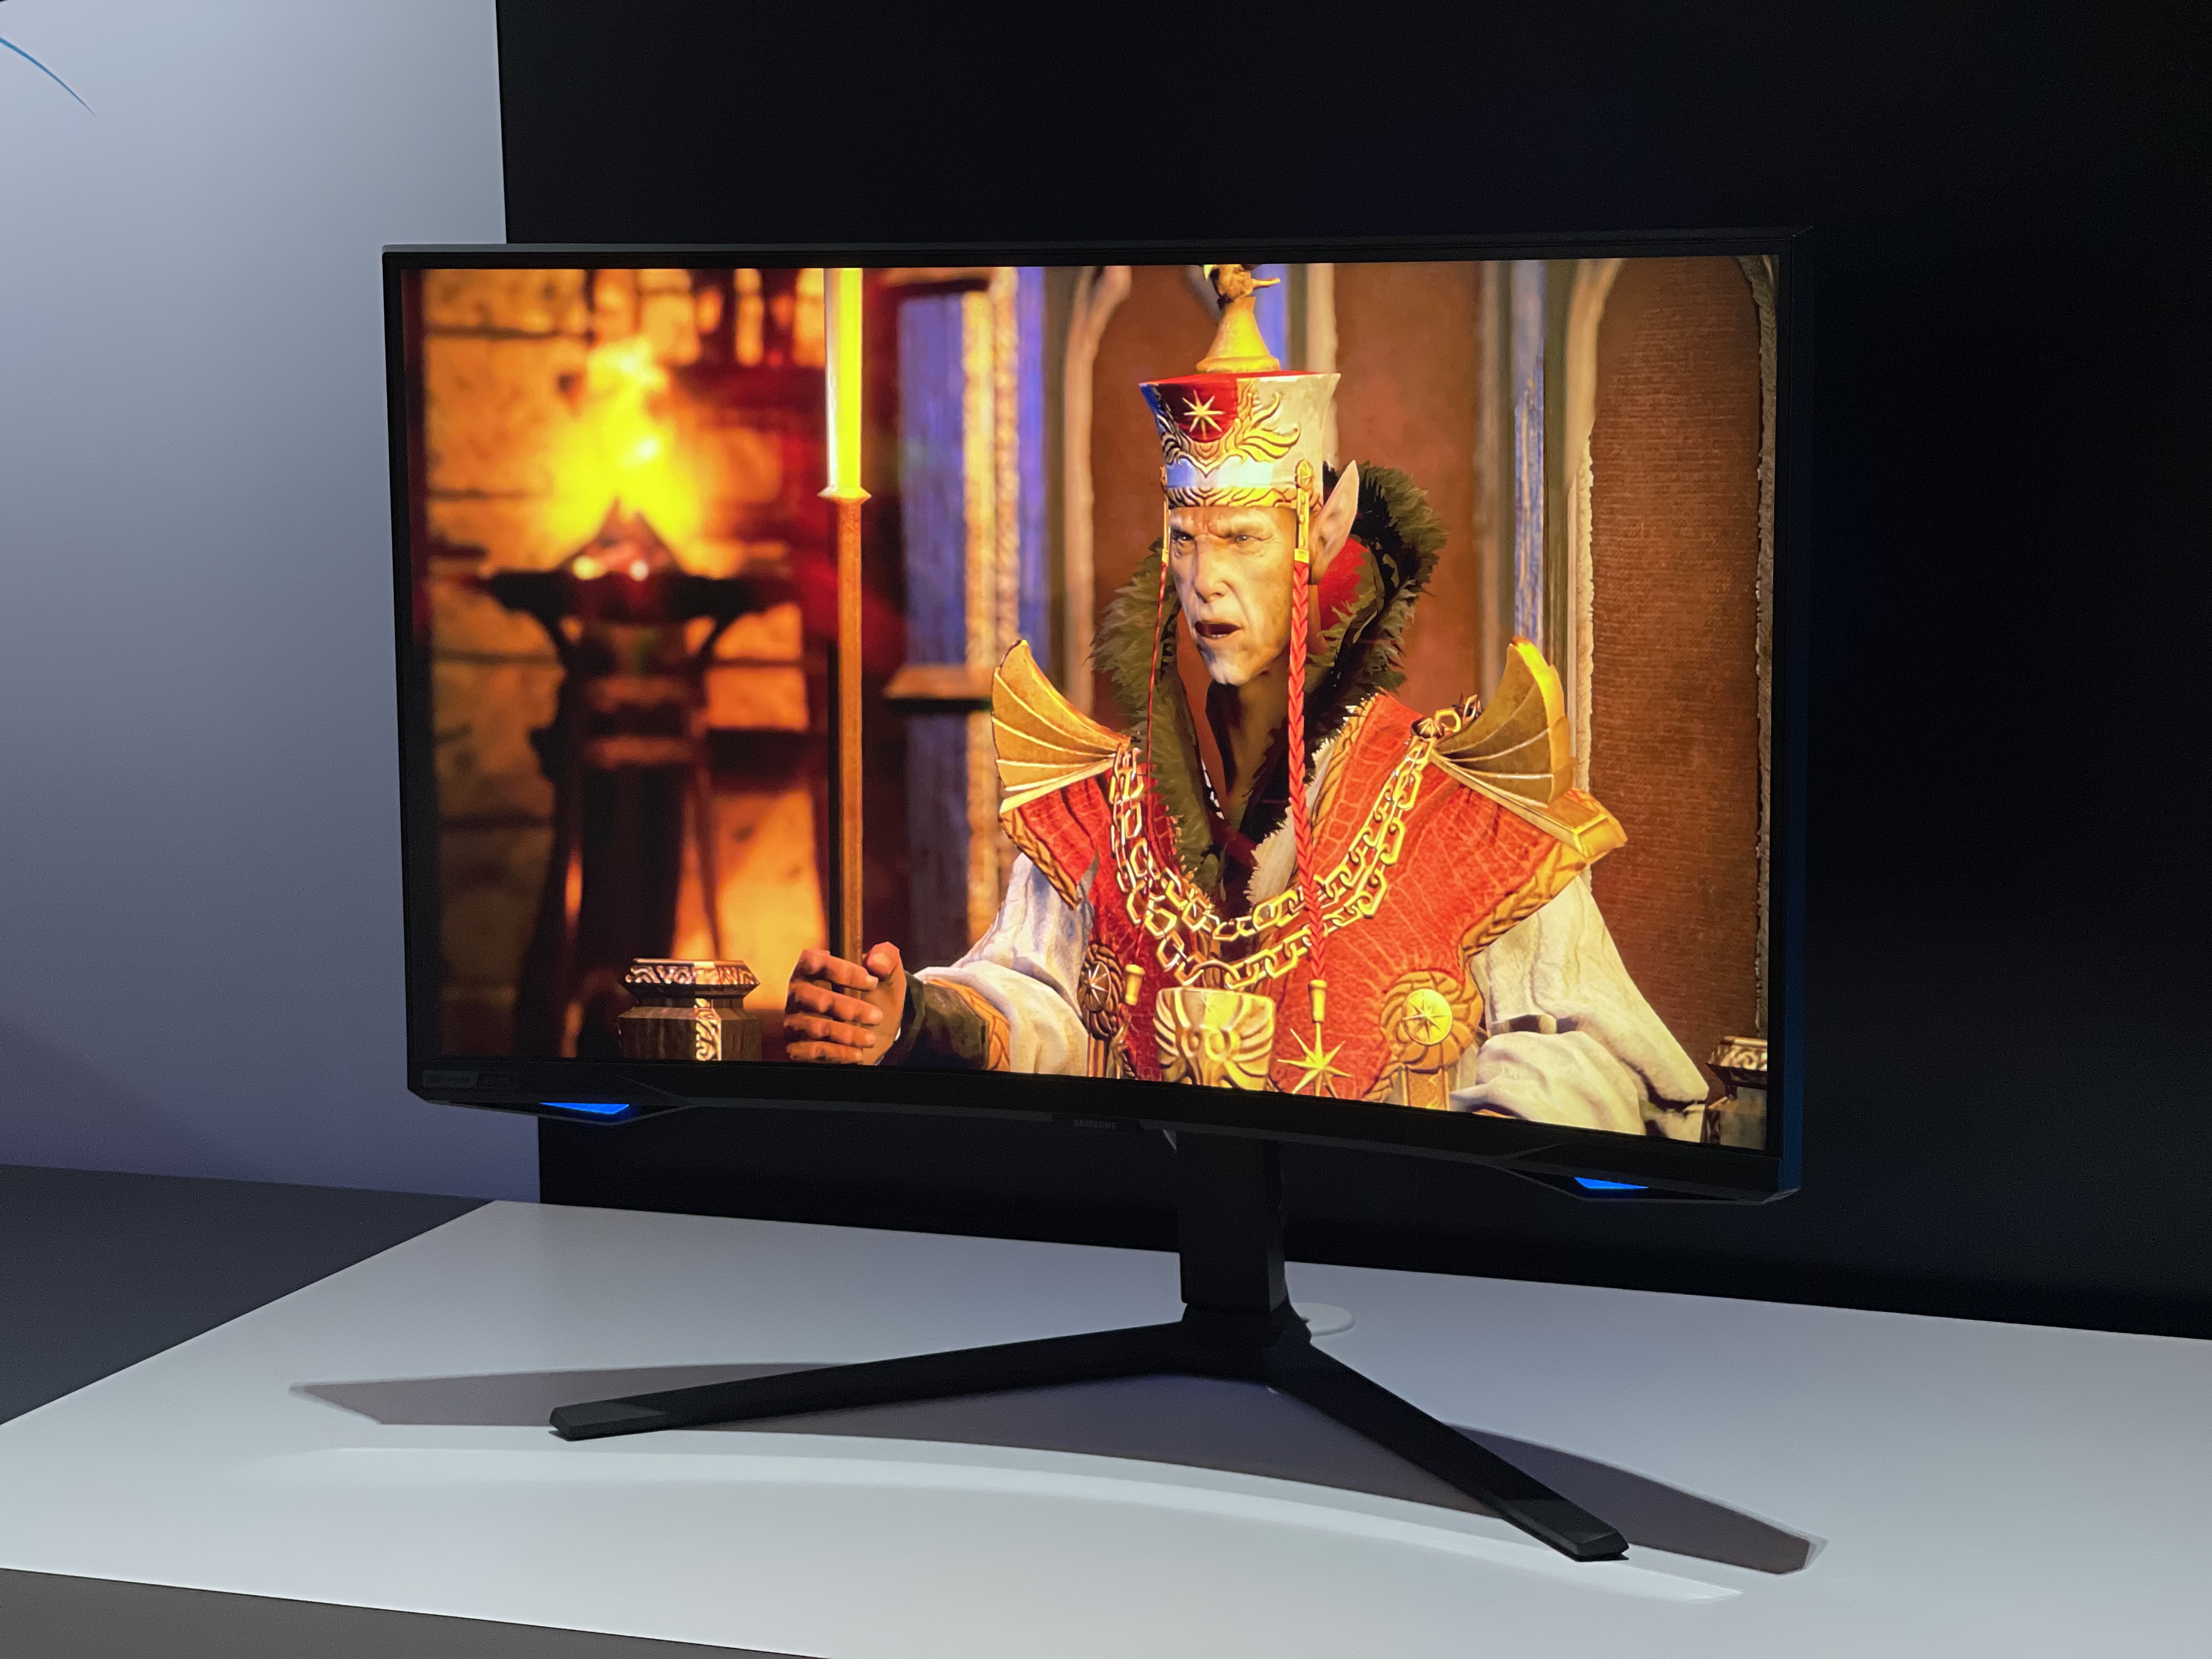 Samsung Odyssey Neo G8 gaming monitor displaying vibrant gaming content.